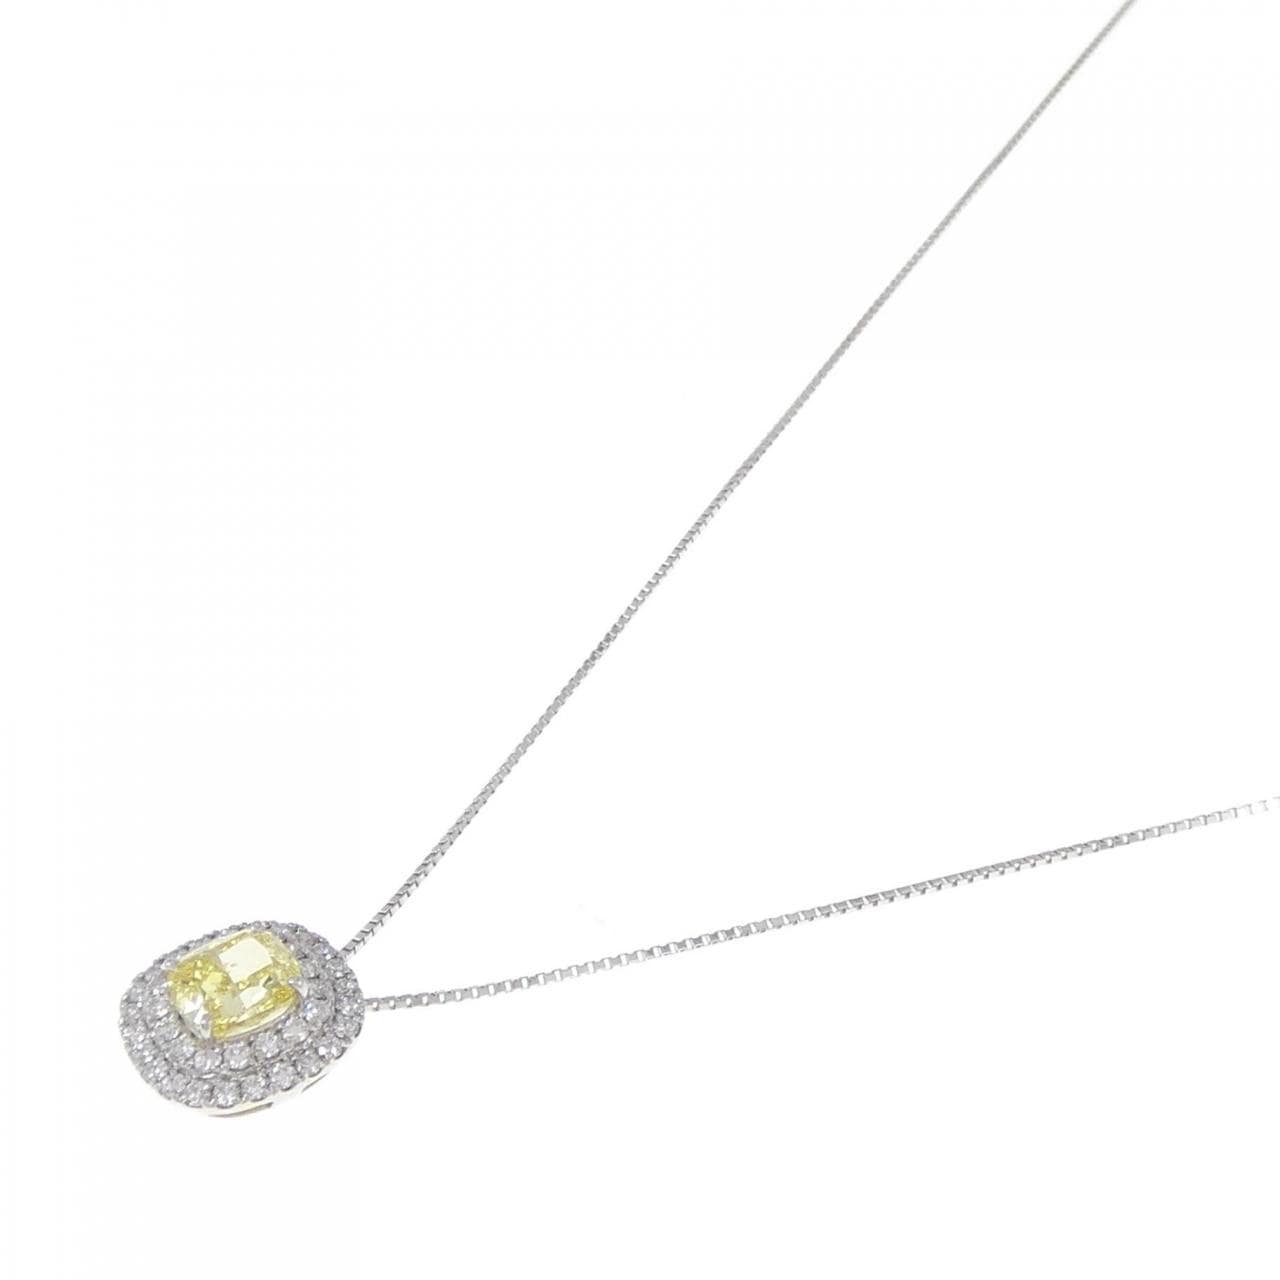 [Remake] PT Diamond Necklace 1.582CT FVY SI2 Fancy Cut